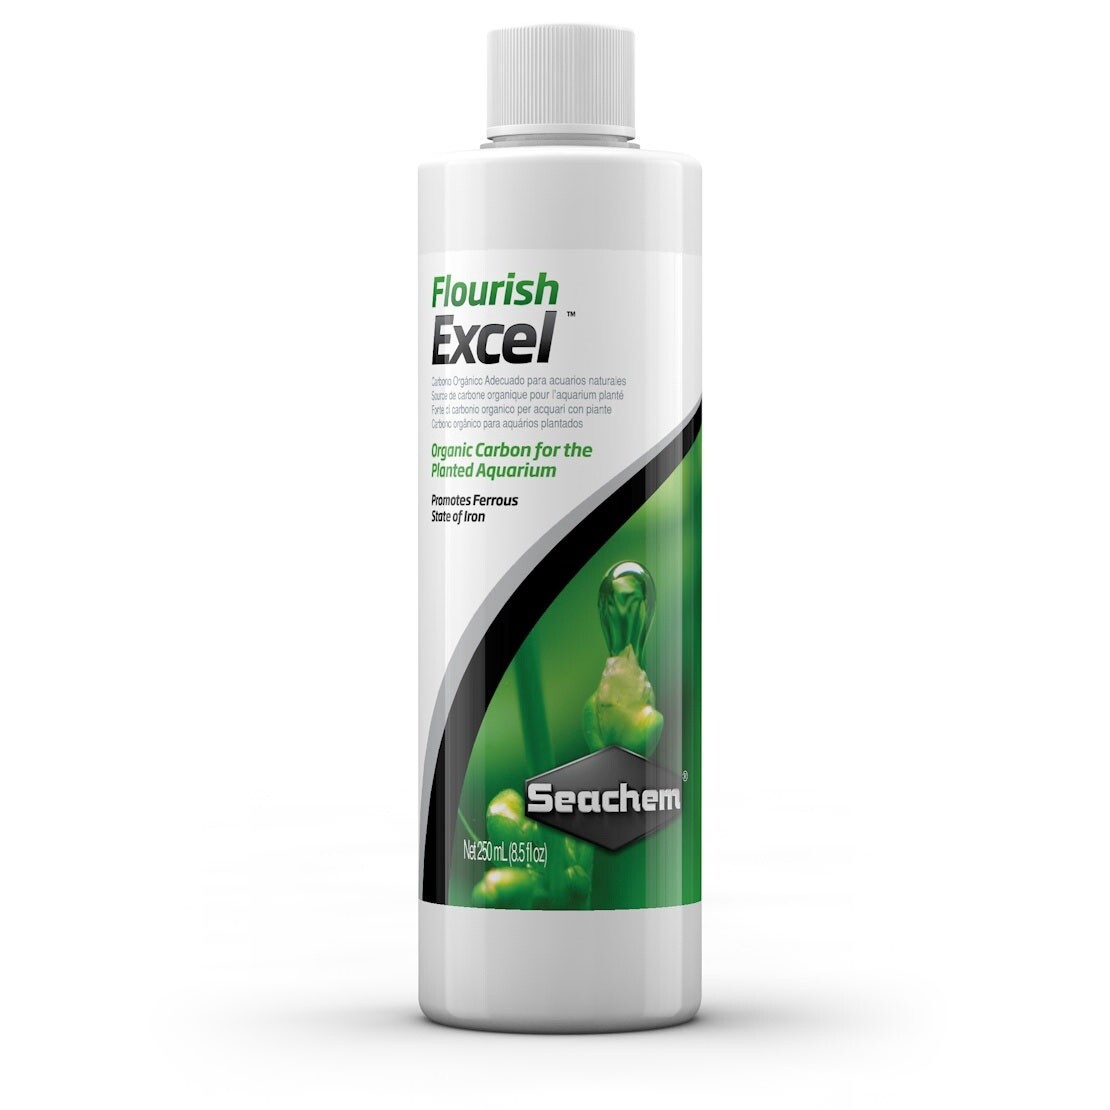 Seachem Flourish, MODEL: Seachem Flourish Excel 250ml